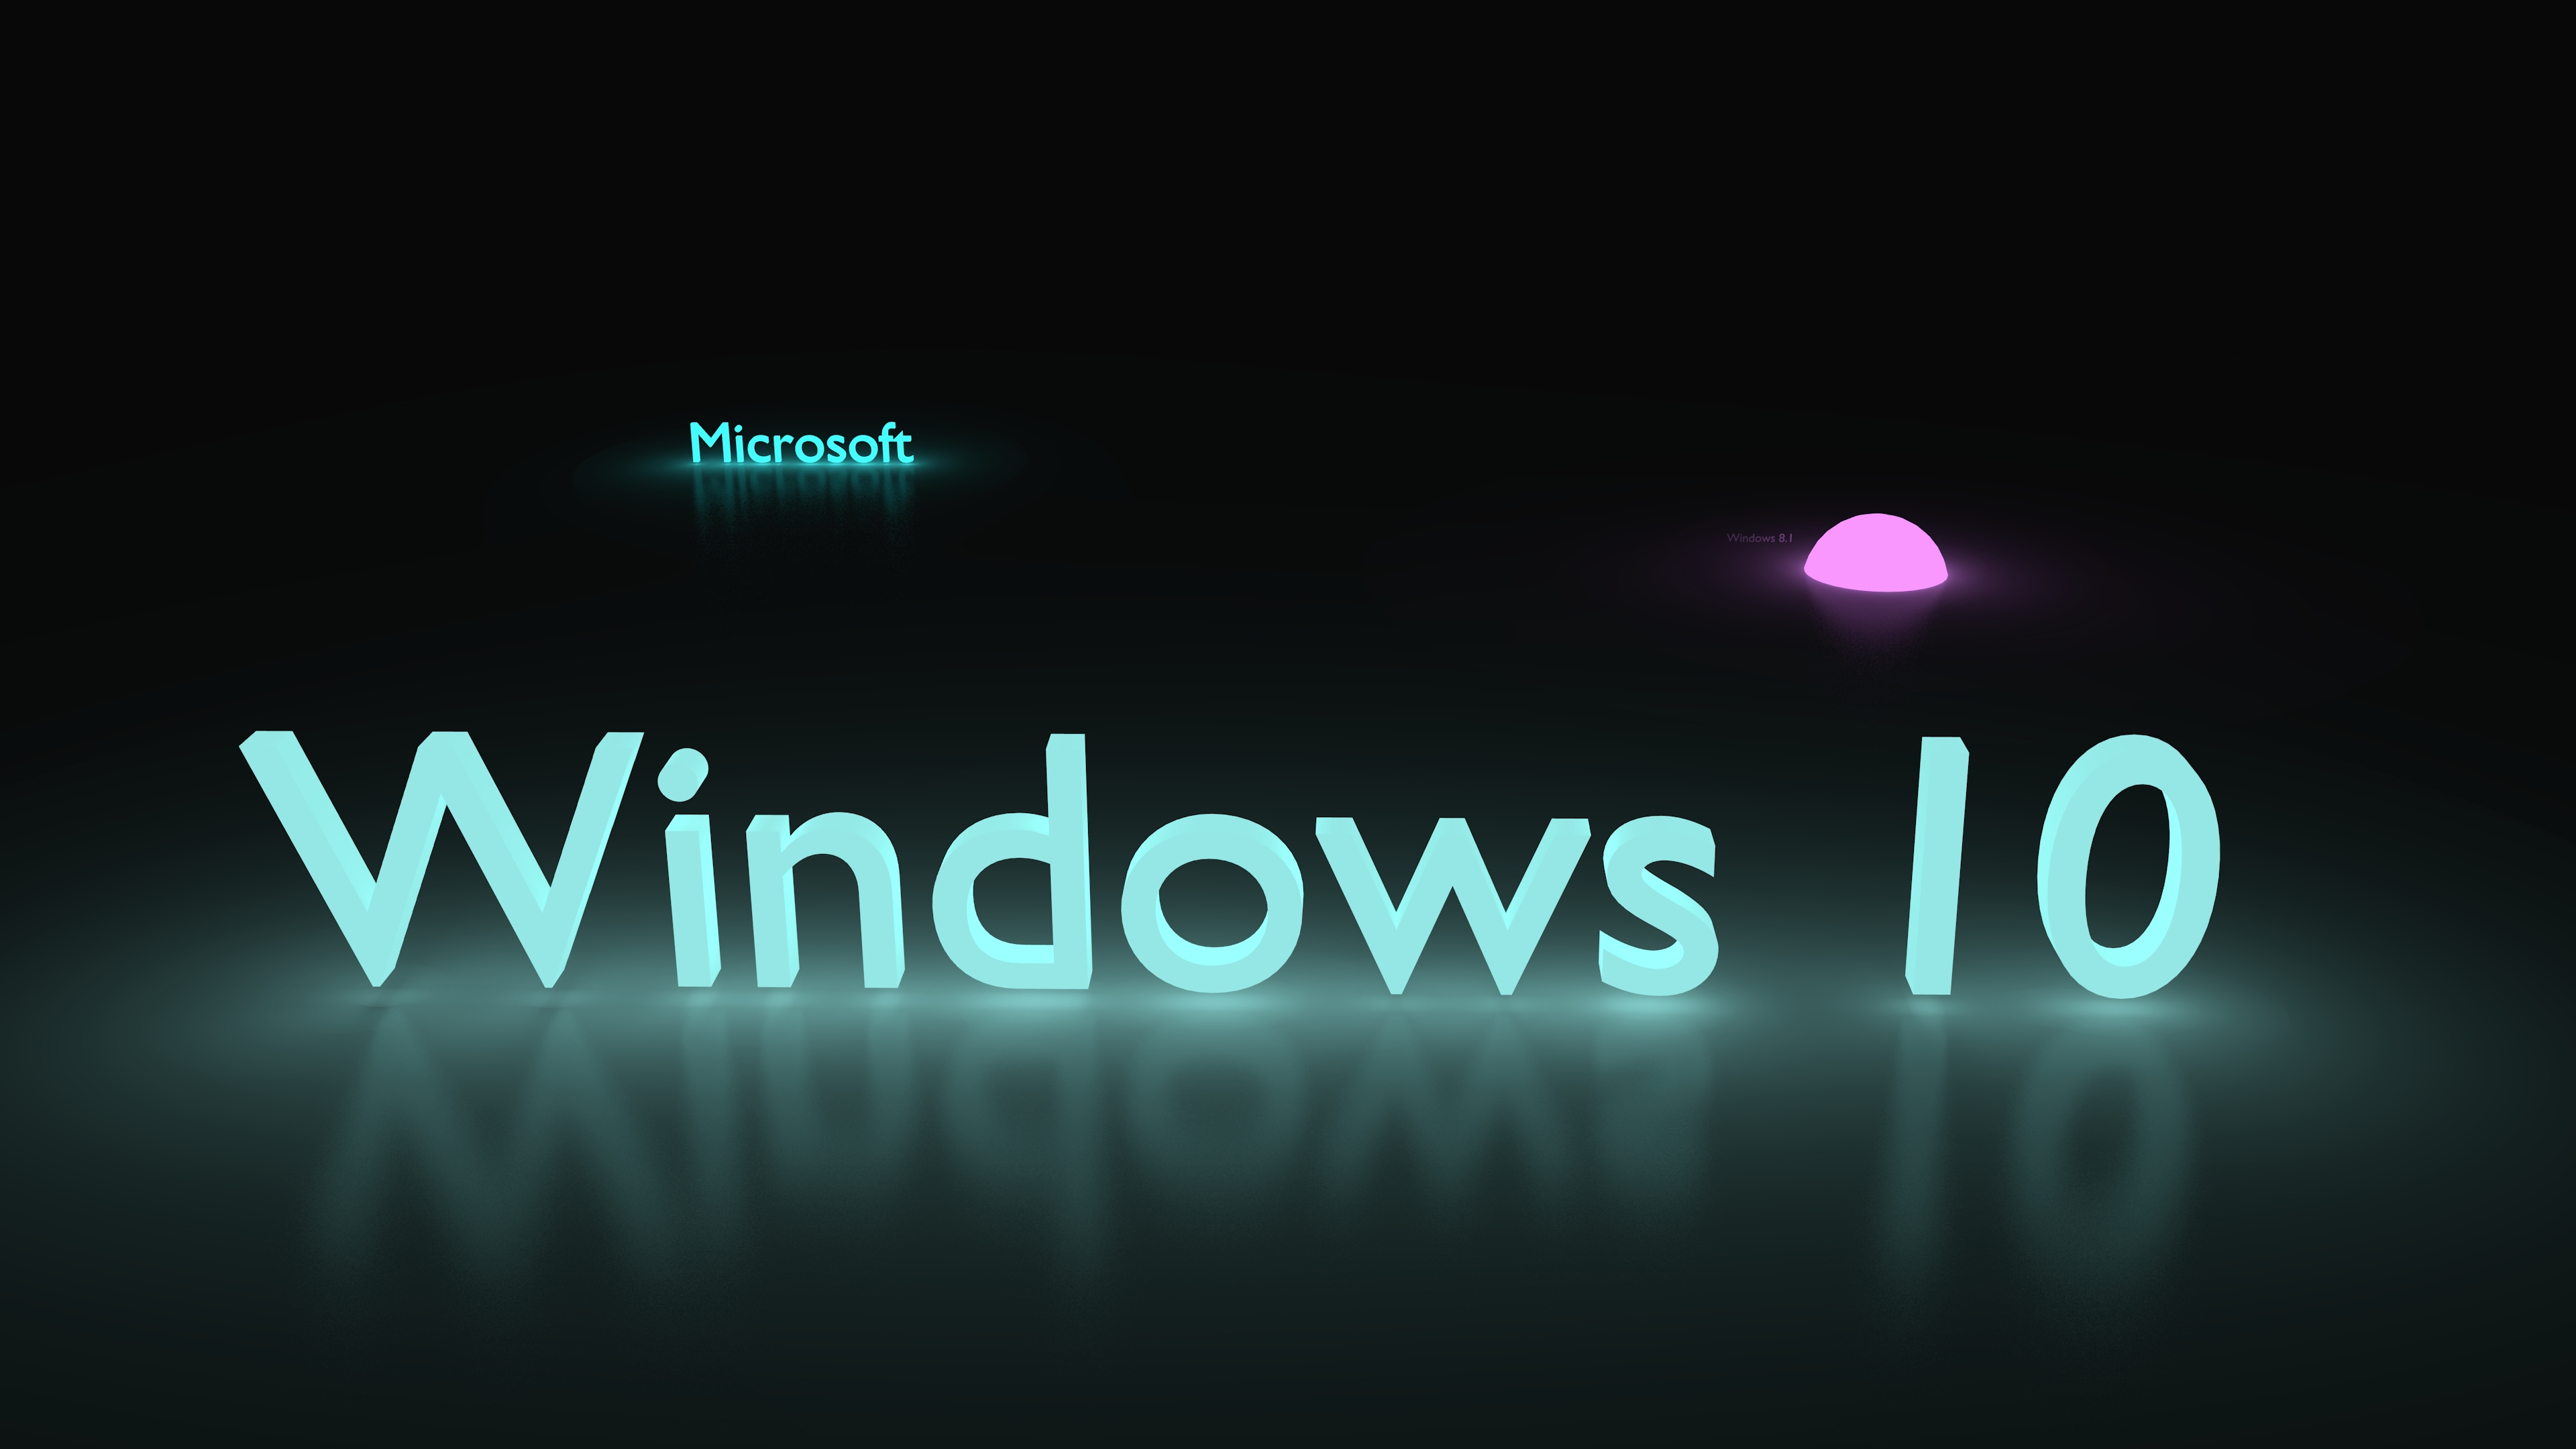 Windows 10 glowing blue by viktik